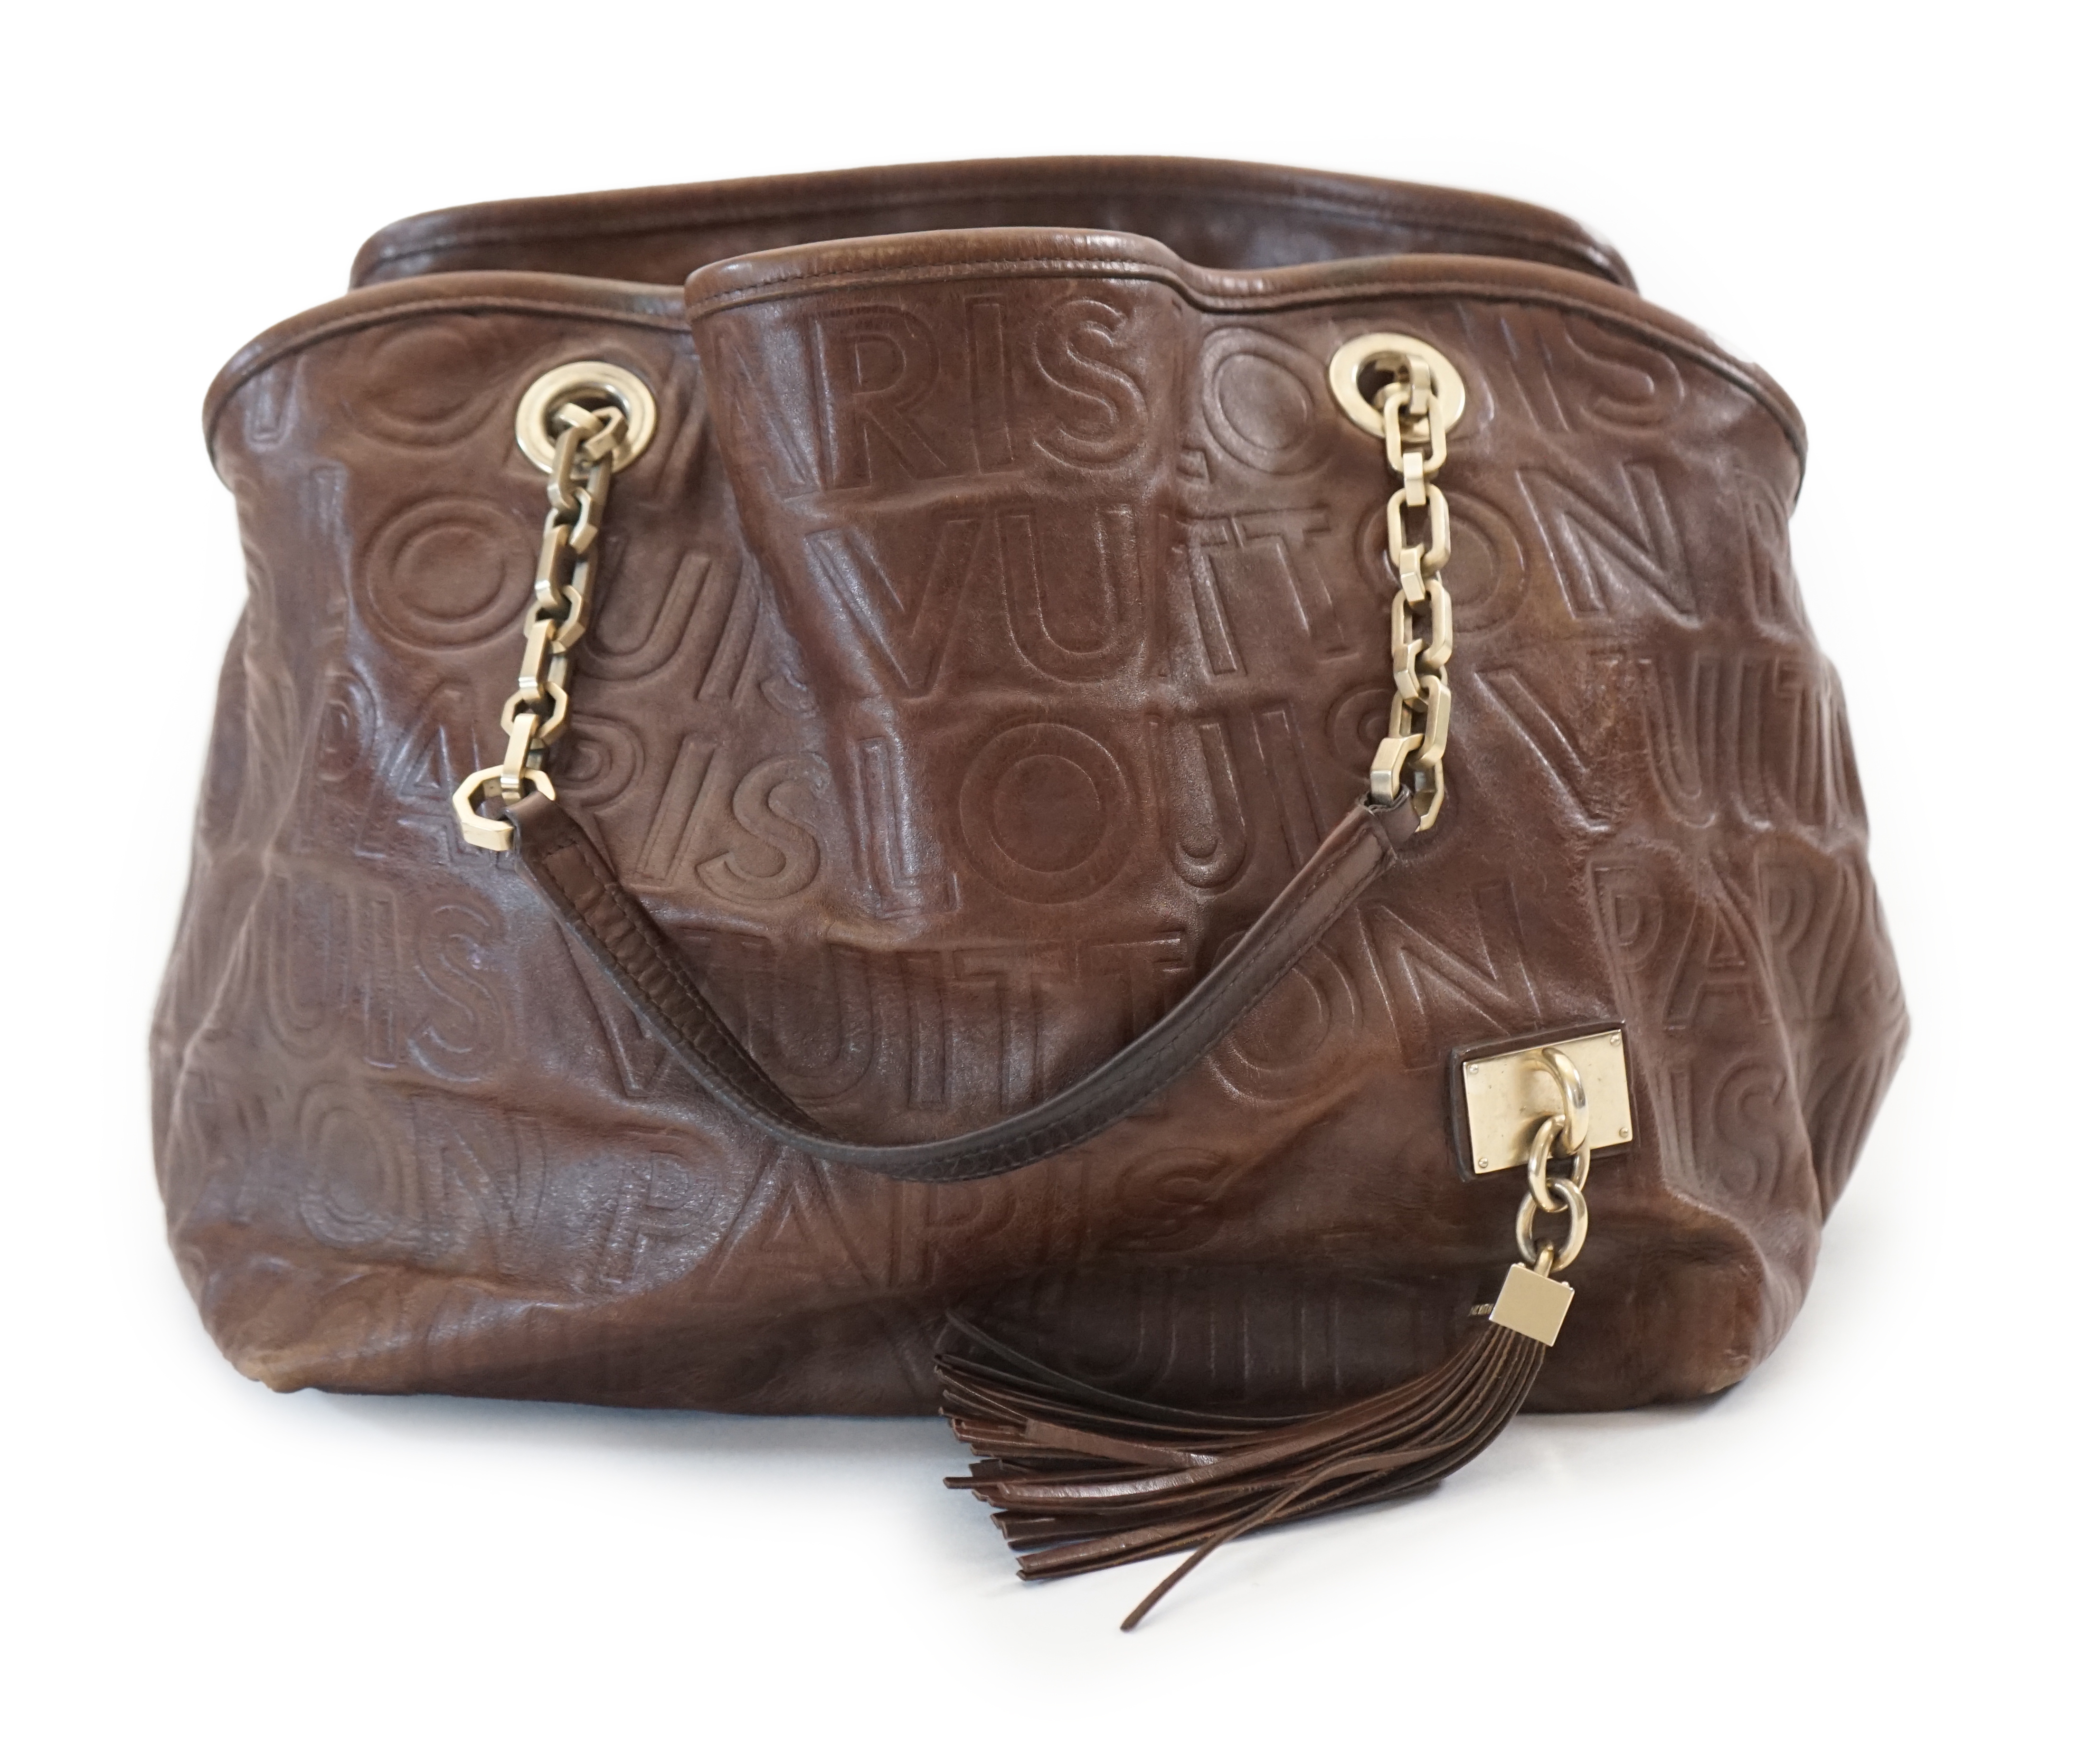 A Louis Vuitton Whisper brown leather handbag, width 31cm, depth 22cm, approx height 26cm